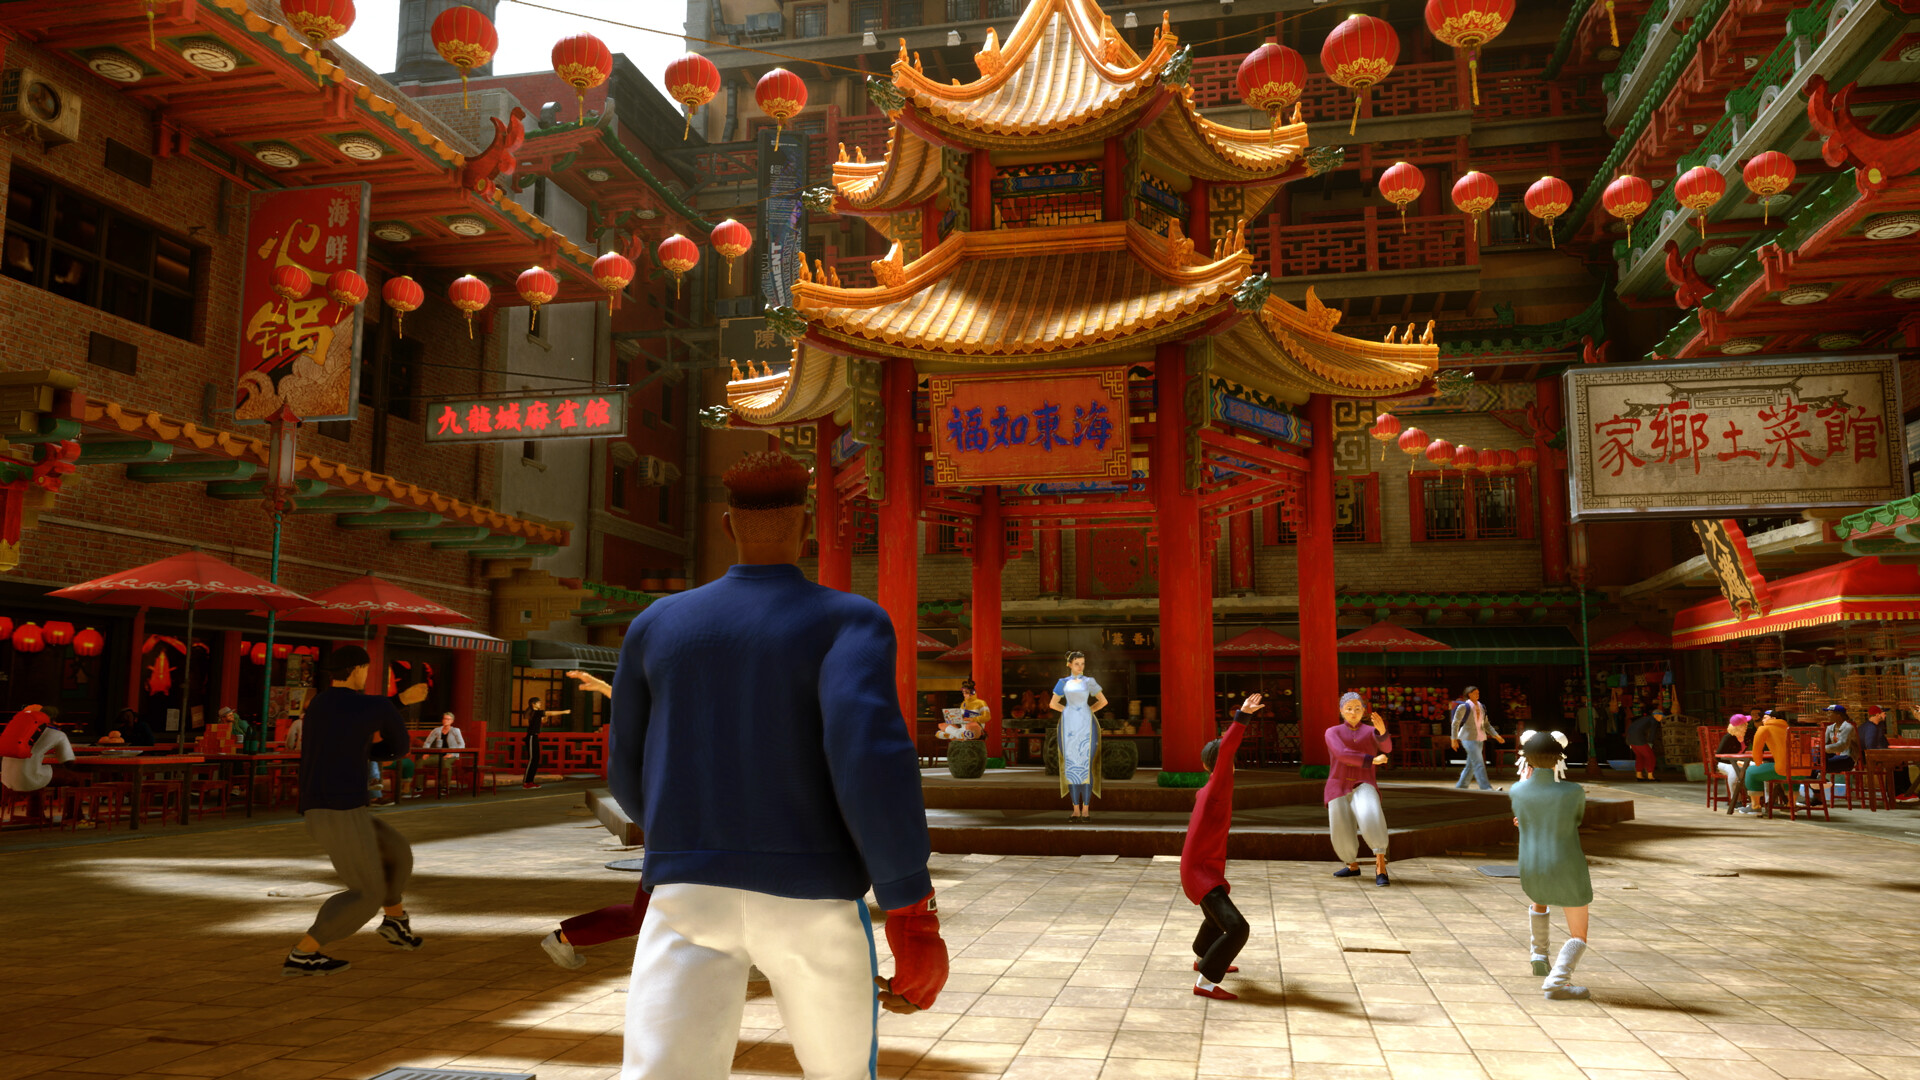 Street Fighter 6 UK Xbox Series X,S CD Key